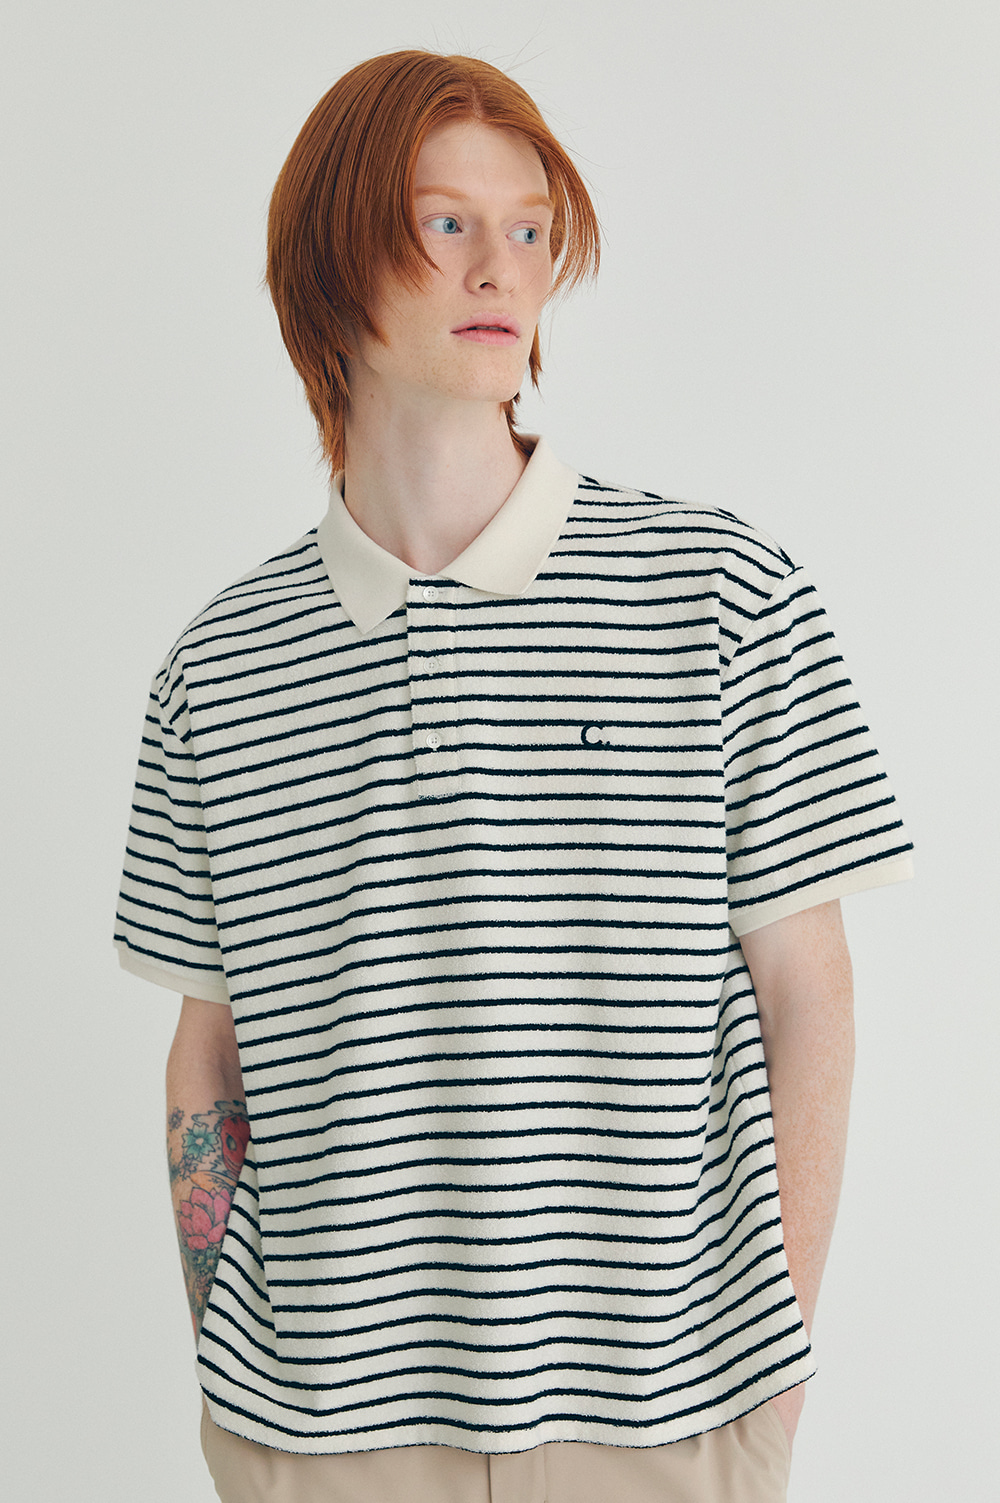 clove - [22SS clove] Stripe Terry Polo Shirt (White)